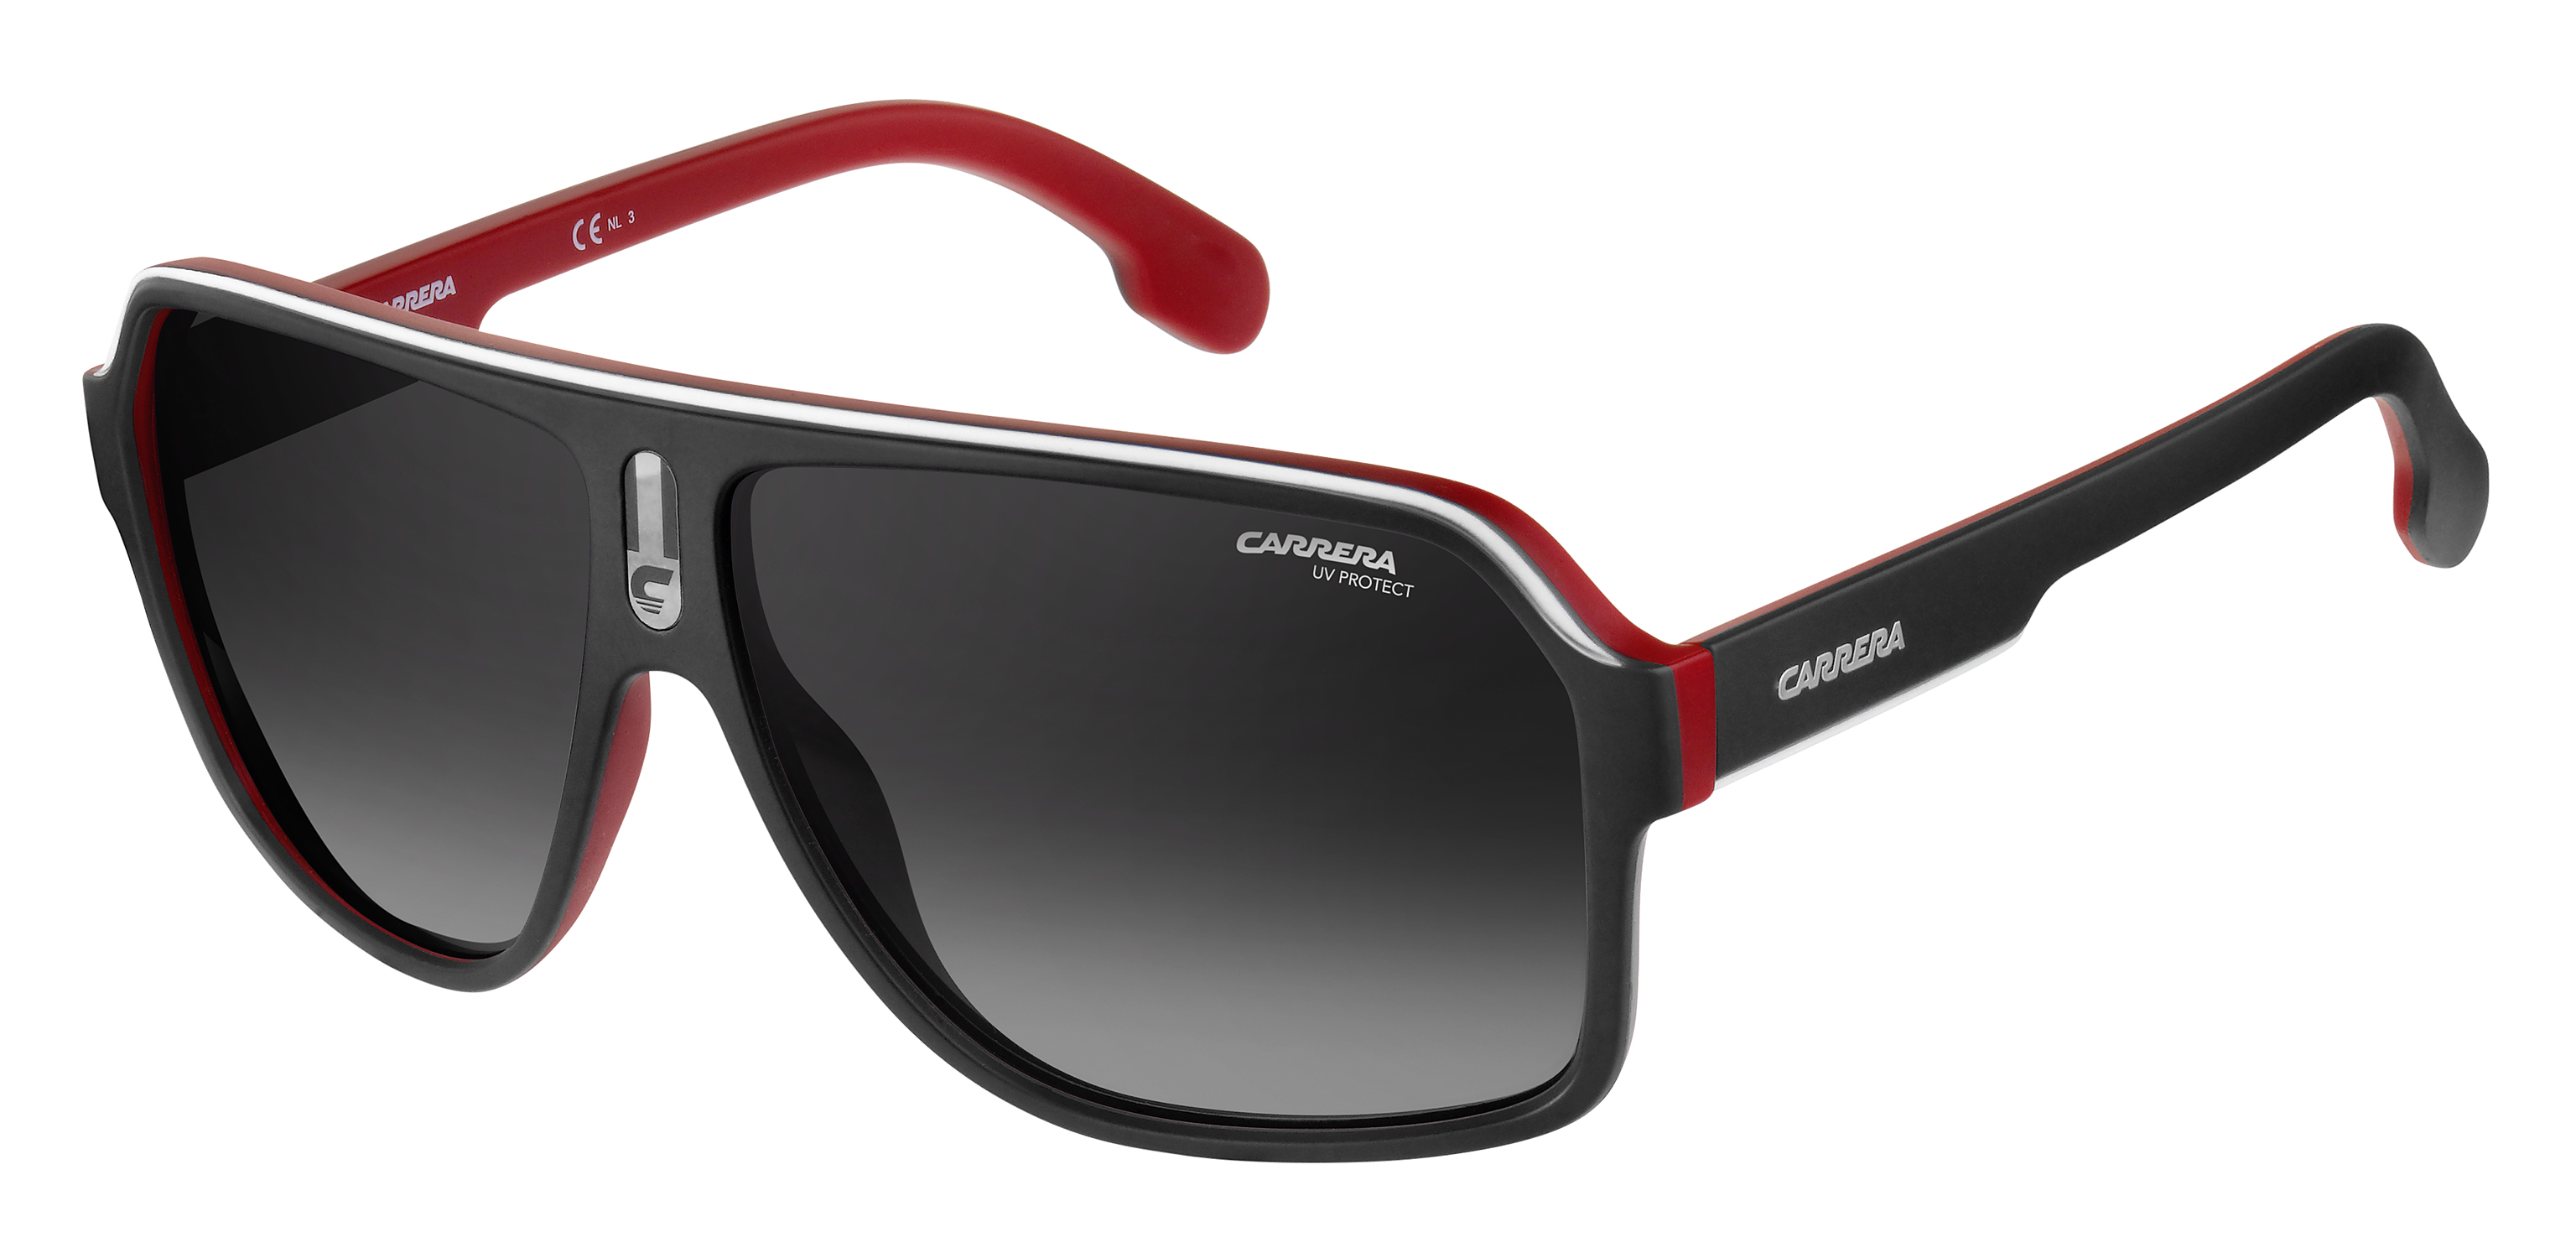 Carrera очки 1052/s. Carrera 1003 / s¡ New,. Очки Carrera мужские солнцезащитные. Очки Carrera 005/s. Фирменные солнцезащитные очки мужские